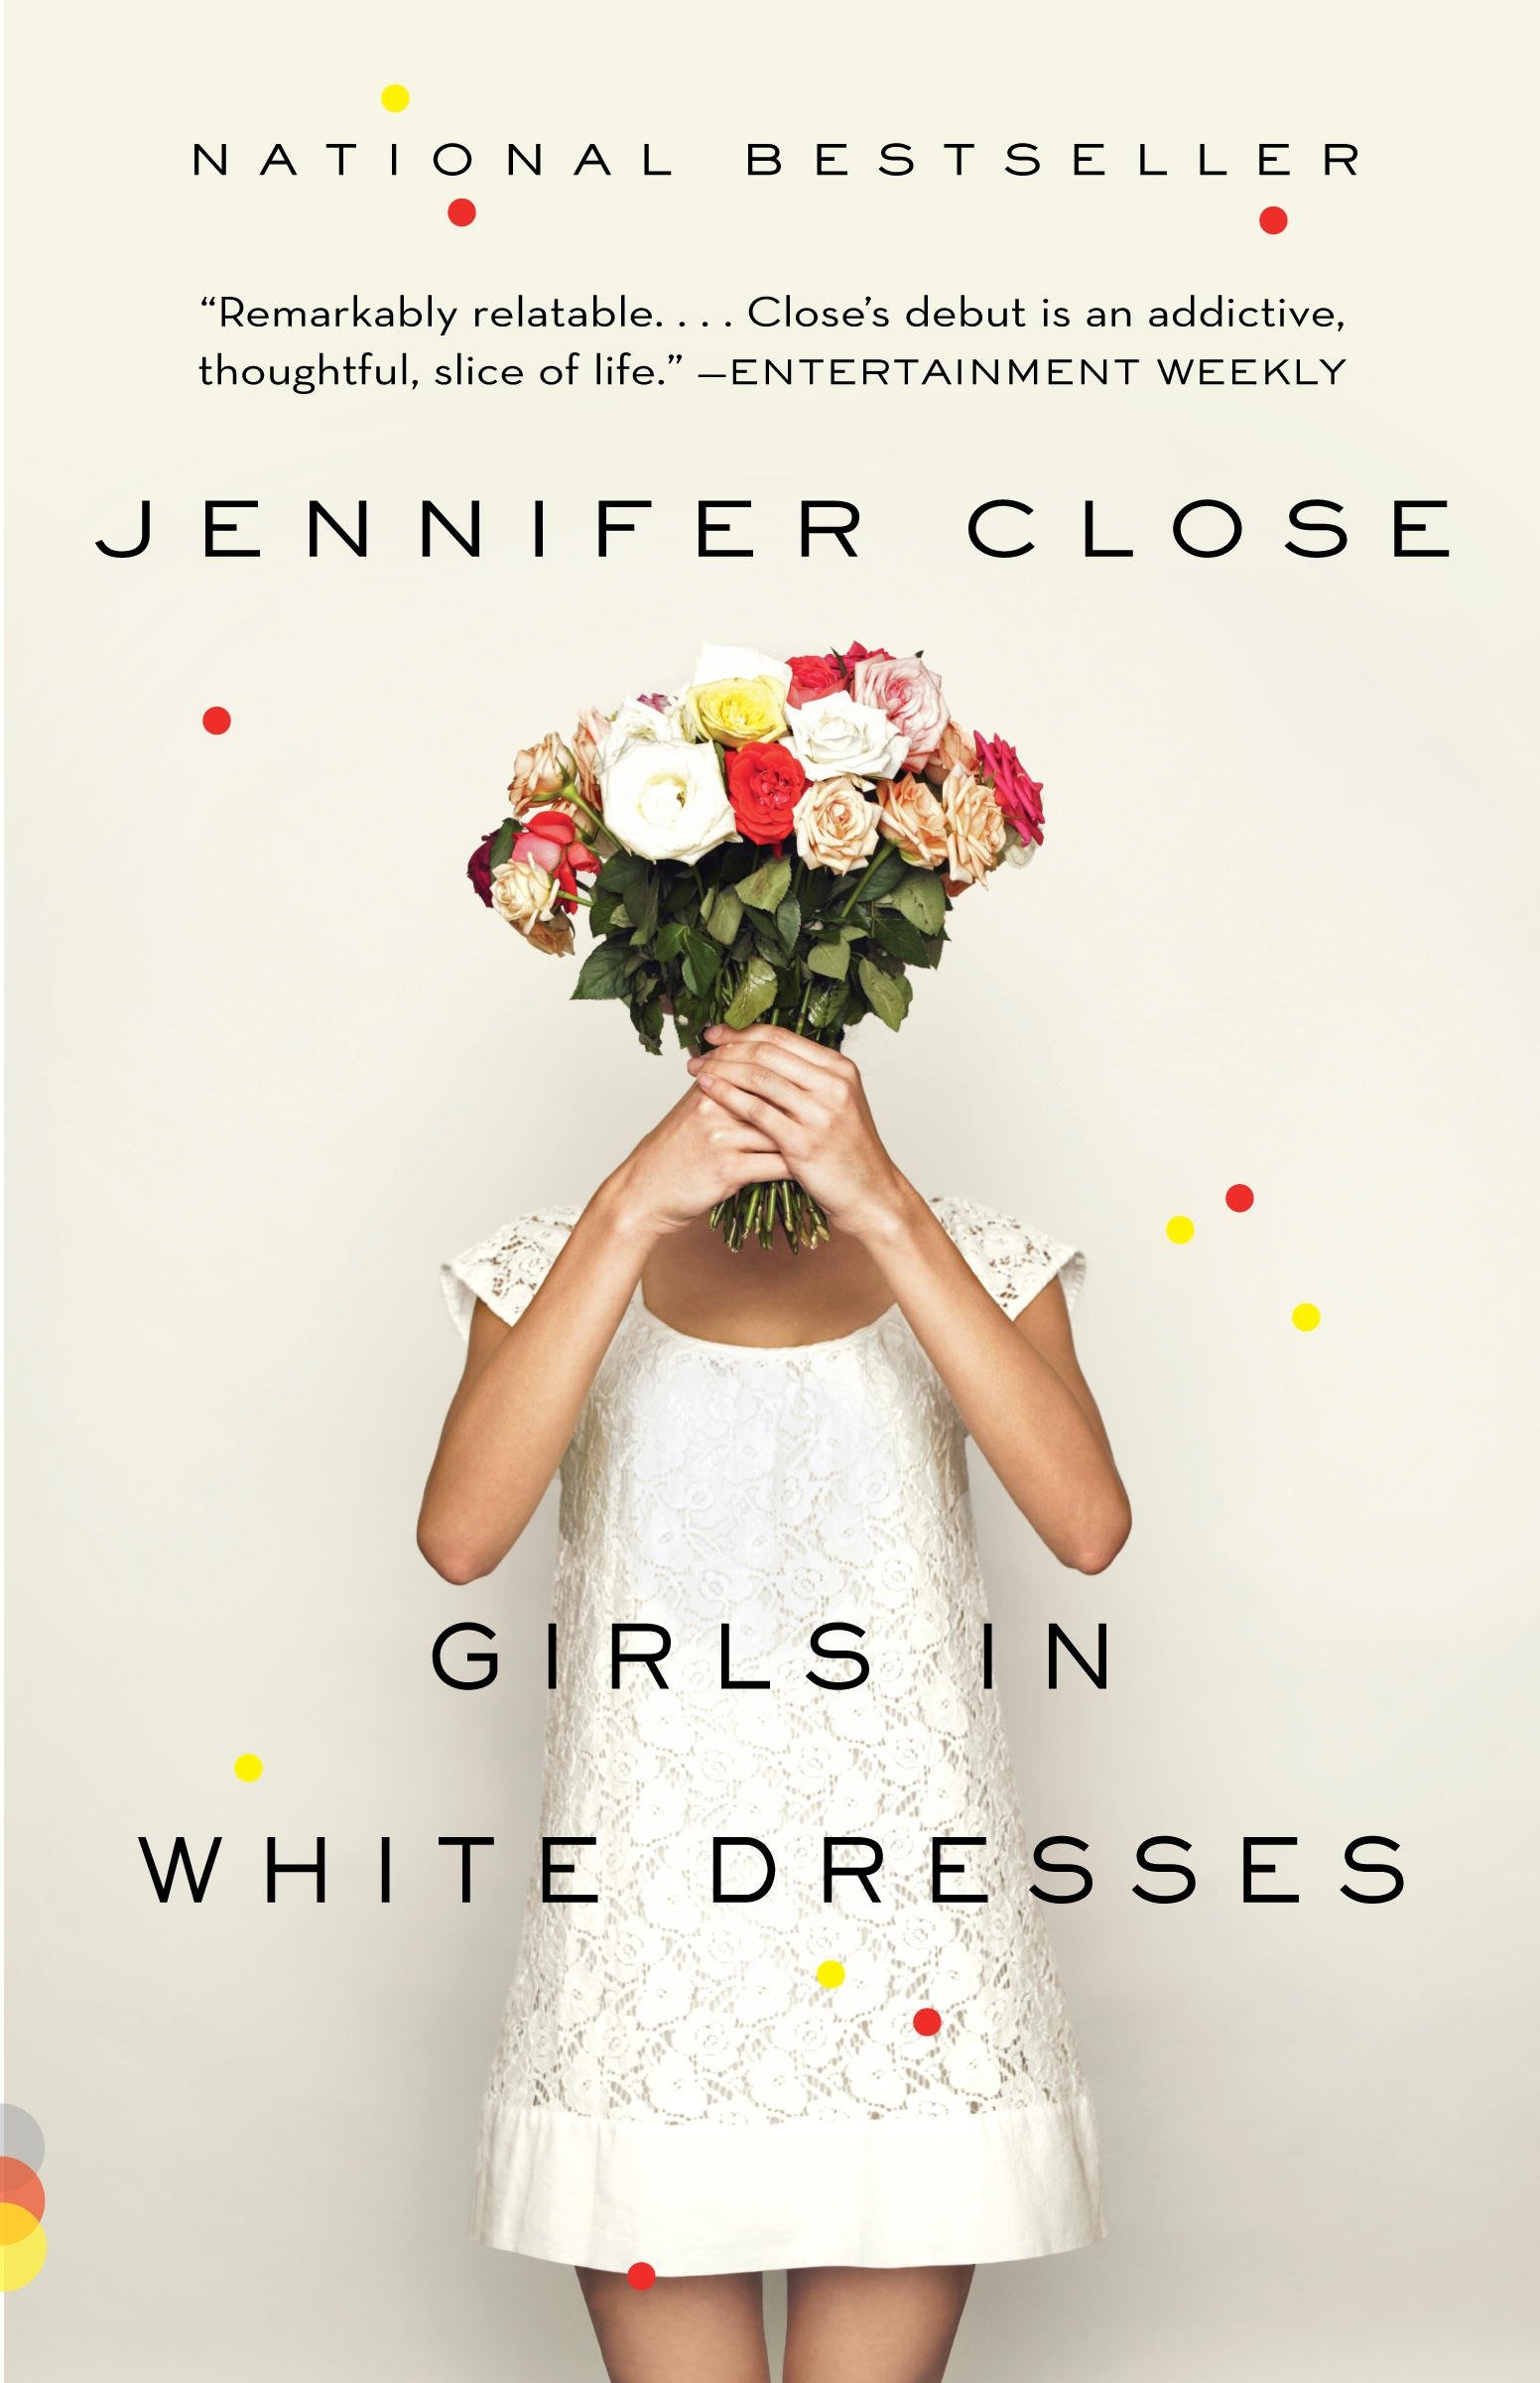 Girls in white dresses cover image